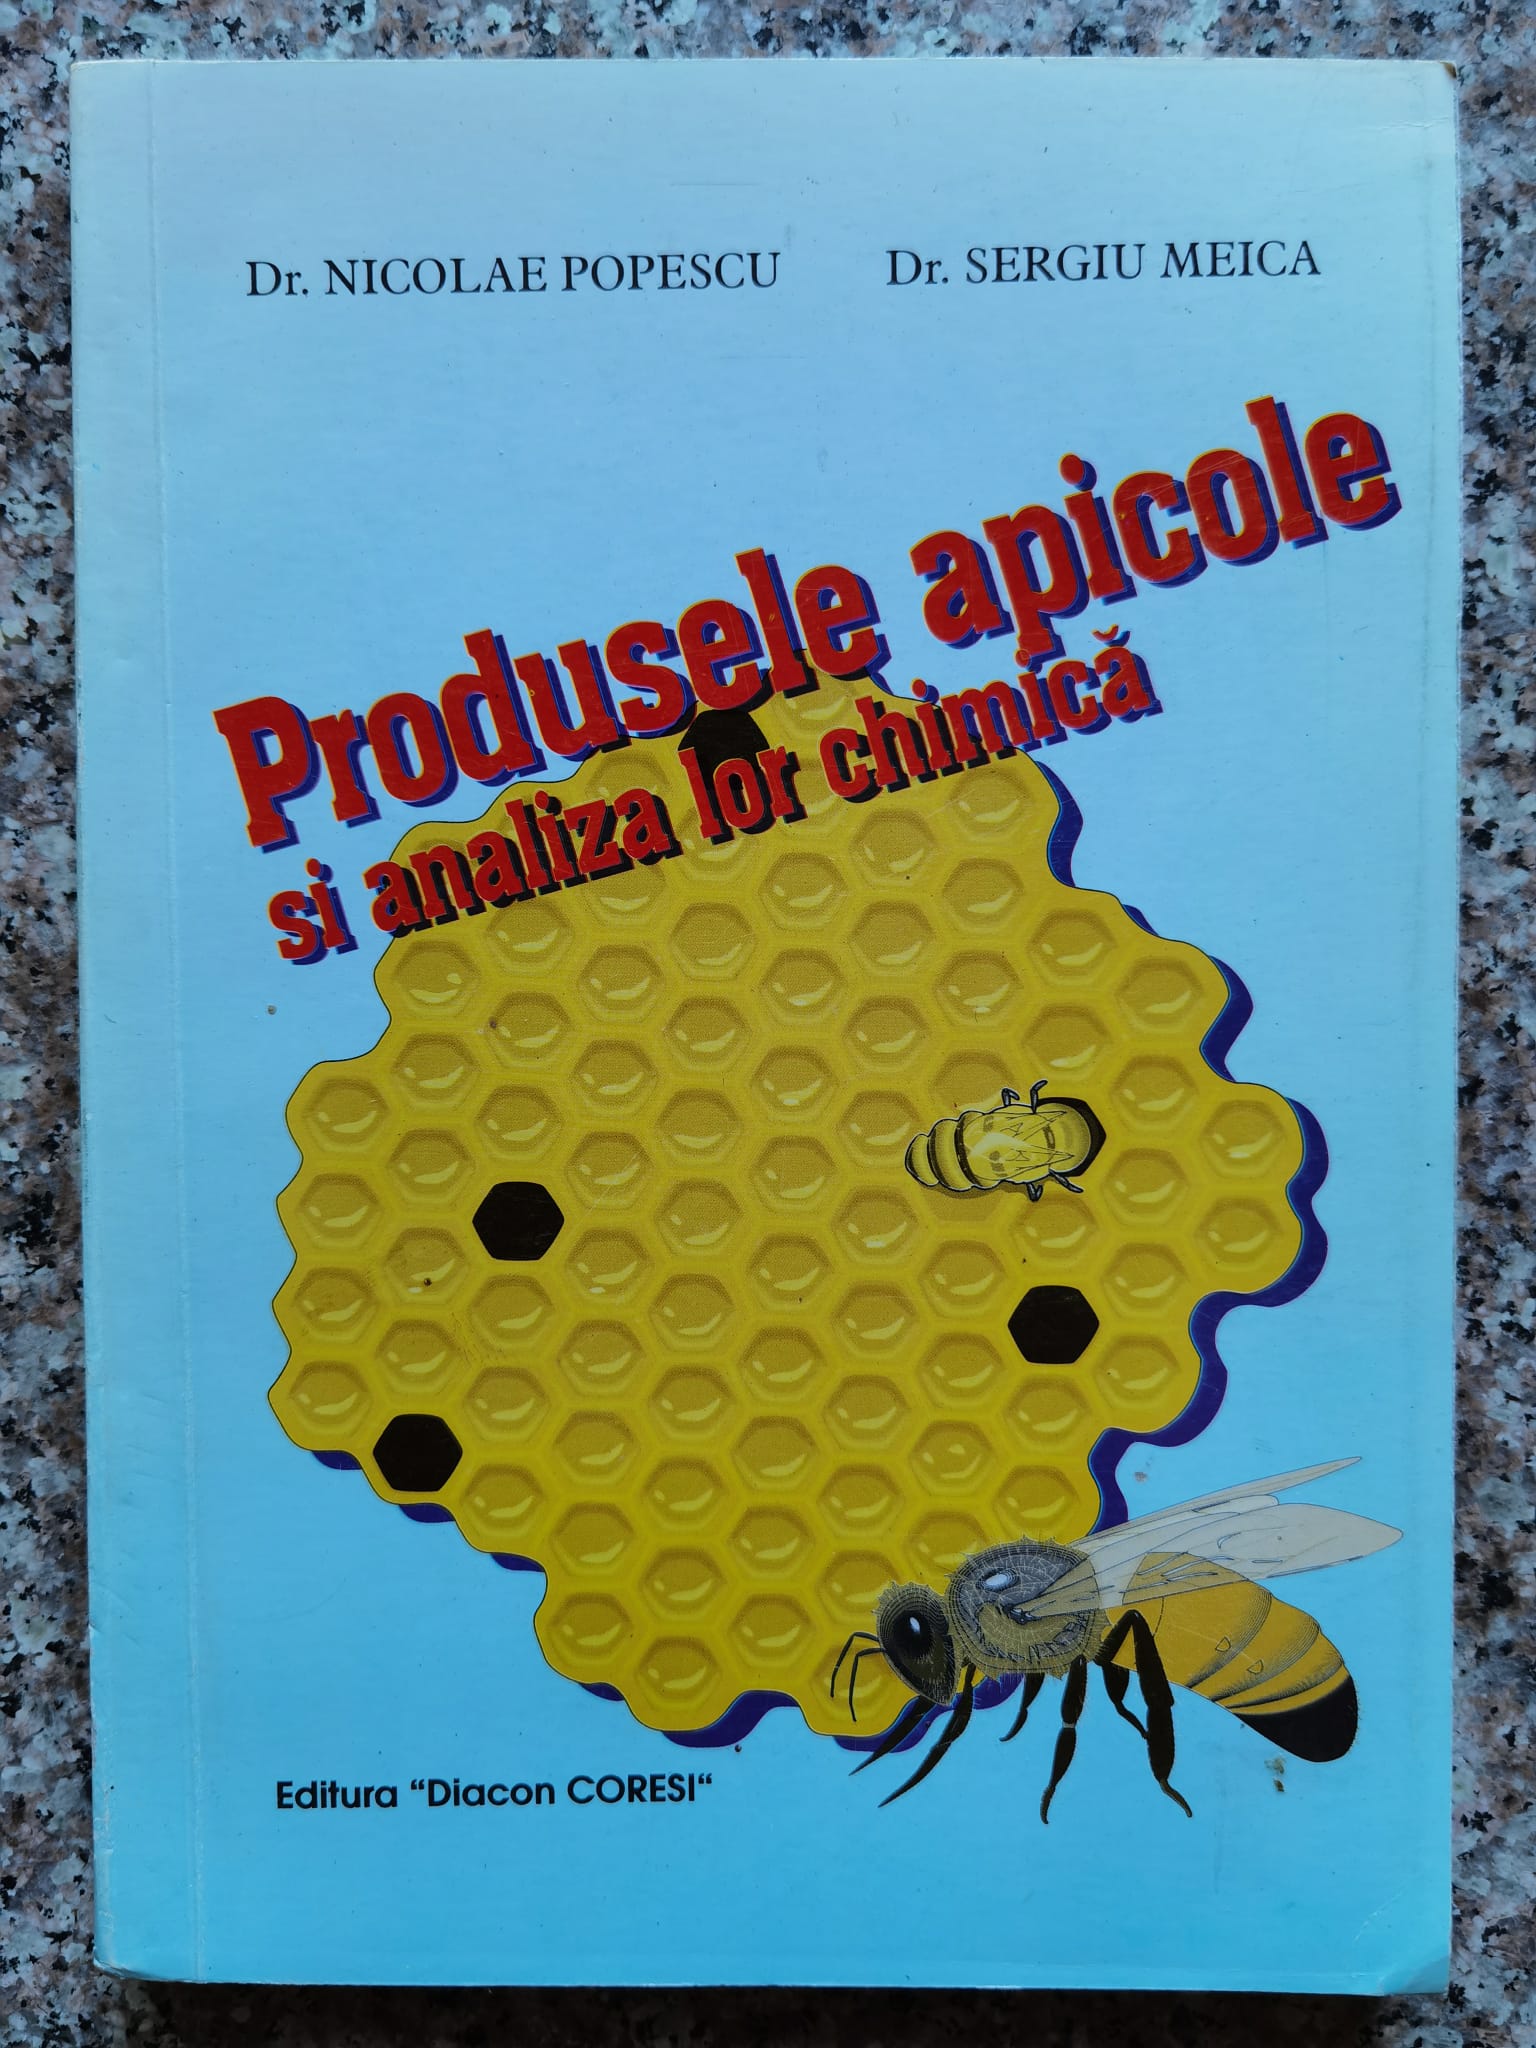 produsele apicole si analiza lor chimica                                                             colectiv                                                                                            